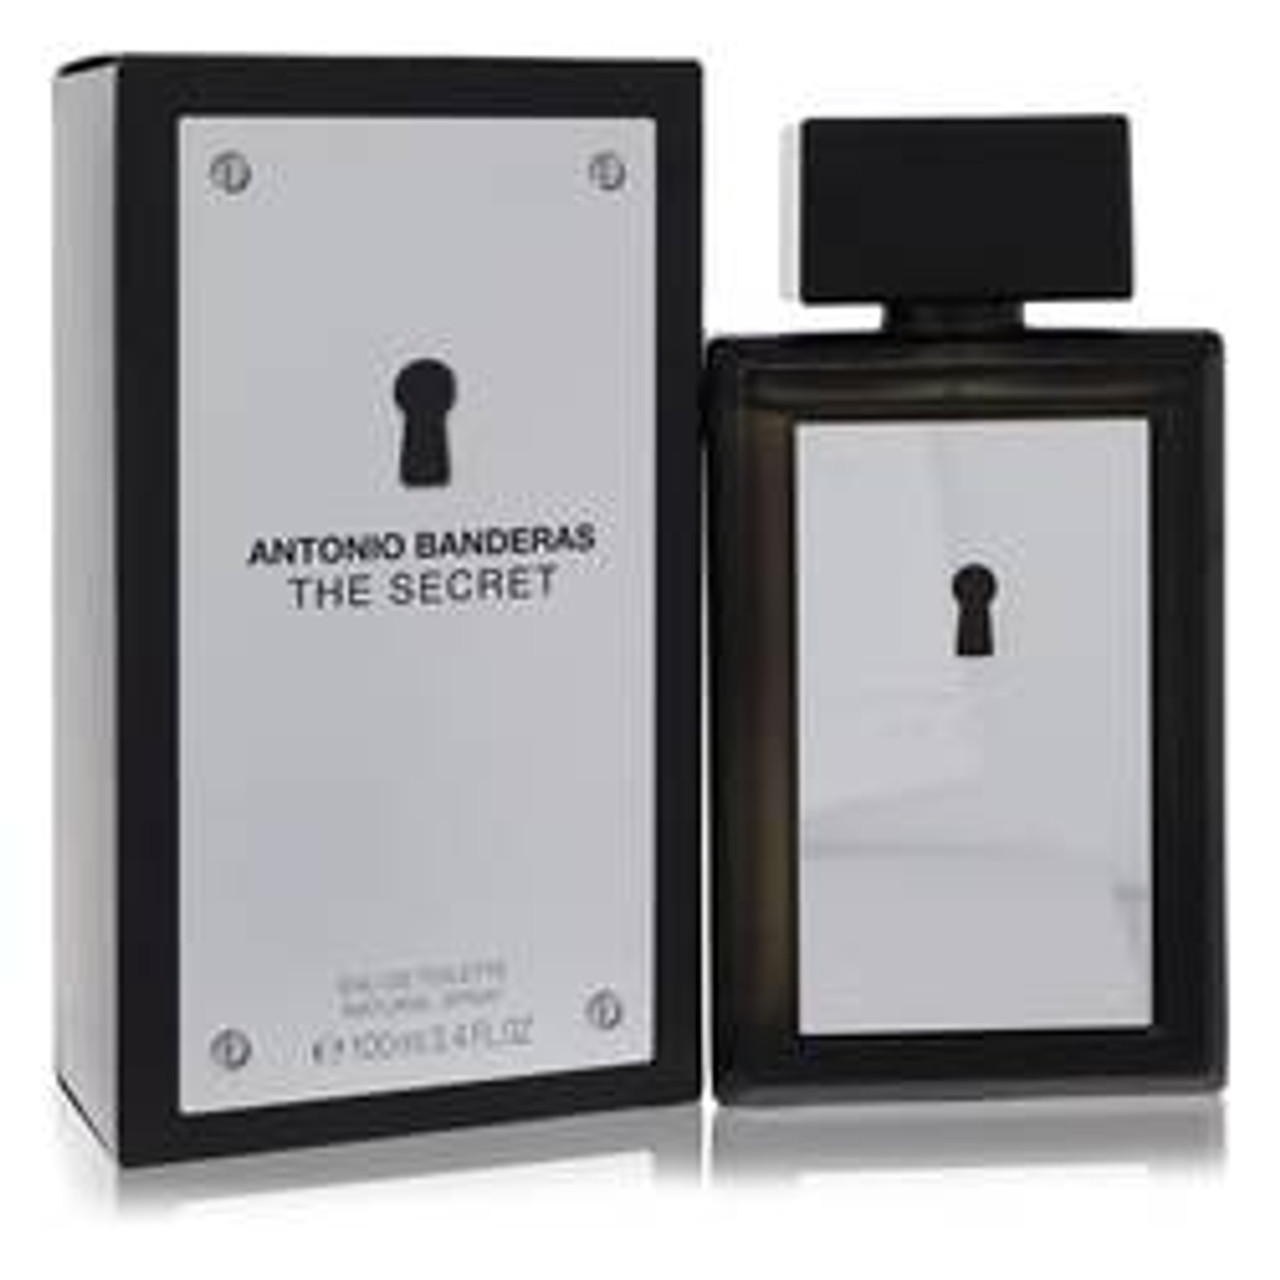 The Secret Cologne By Antonio Banderas Eau De Toilette Spray 3.4 oz for Men - [From 55.00 - Choose pk Qty ] - *Ships from Miami